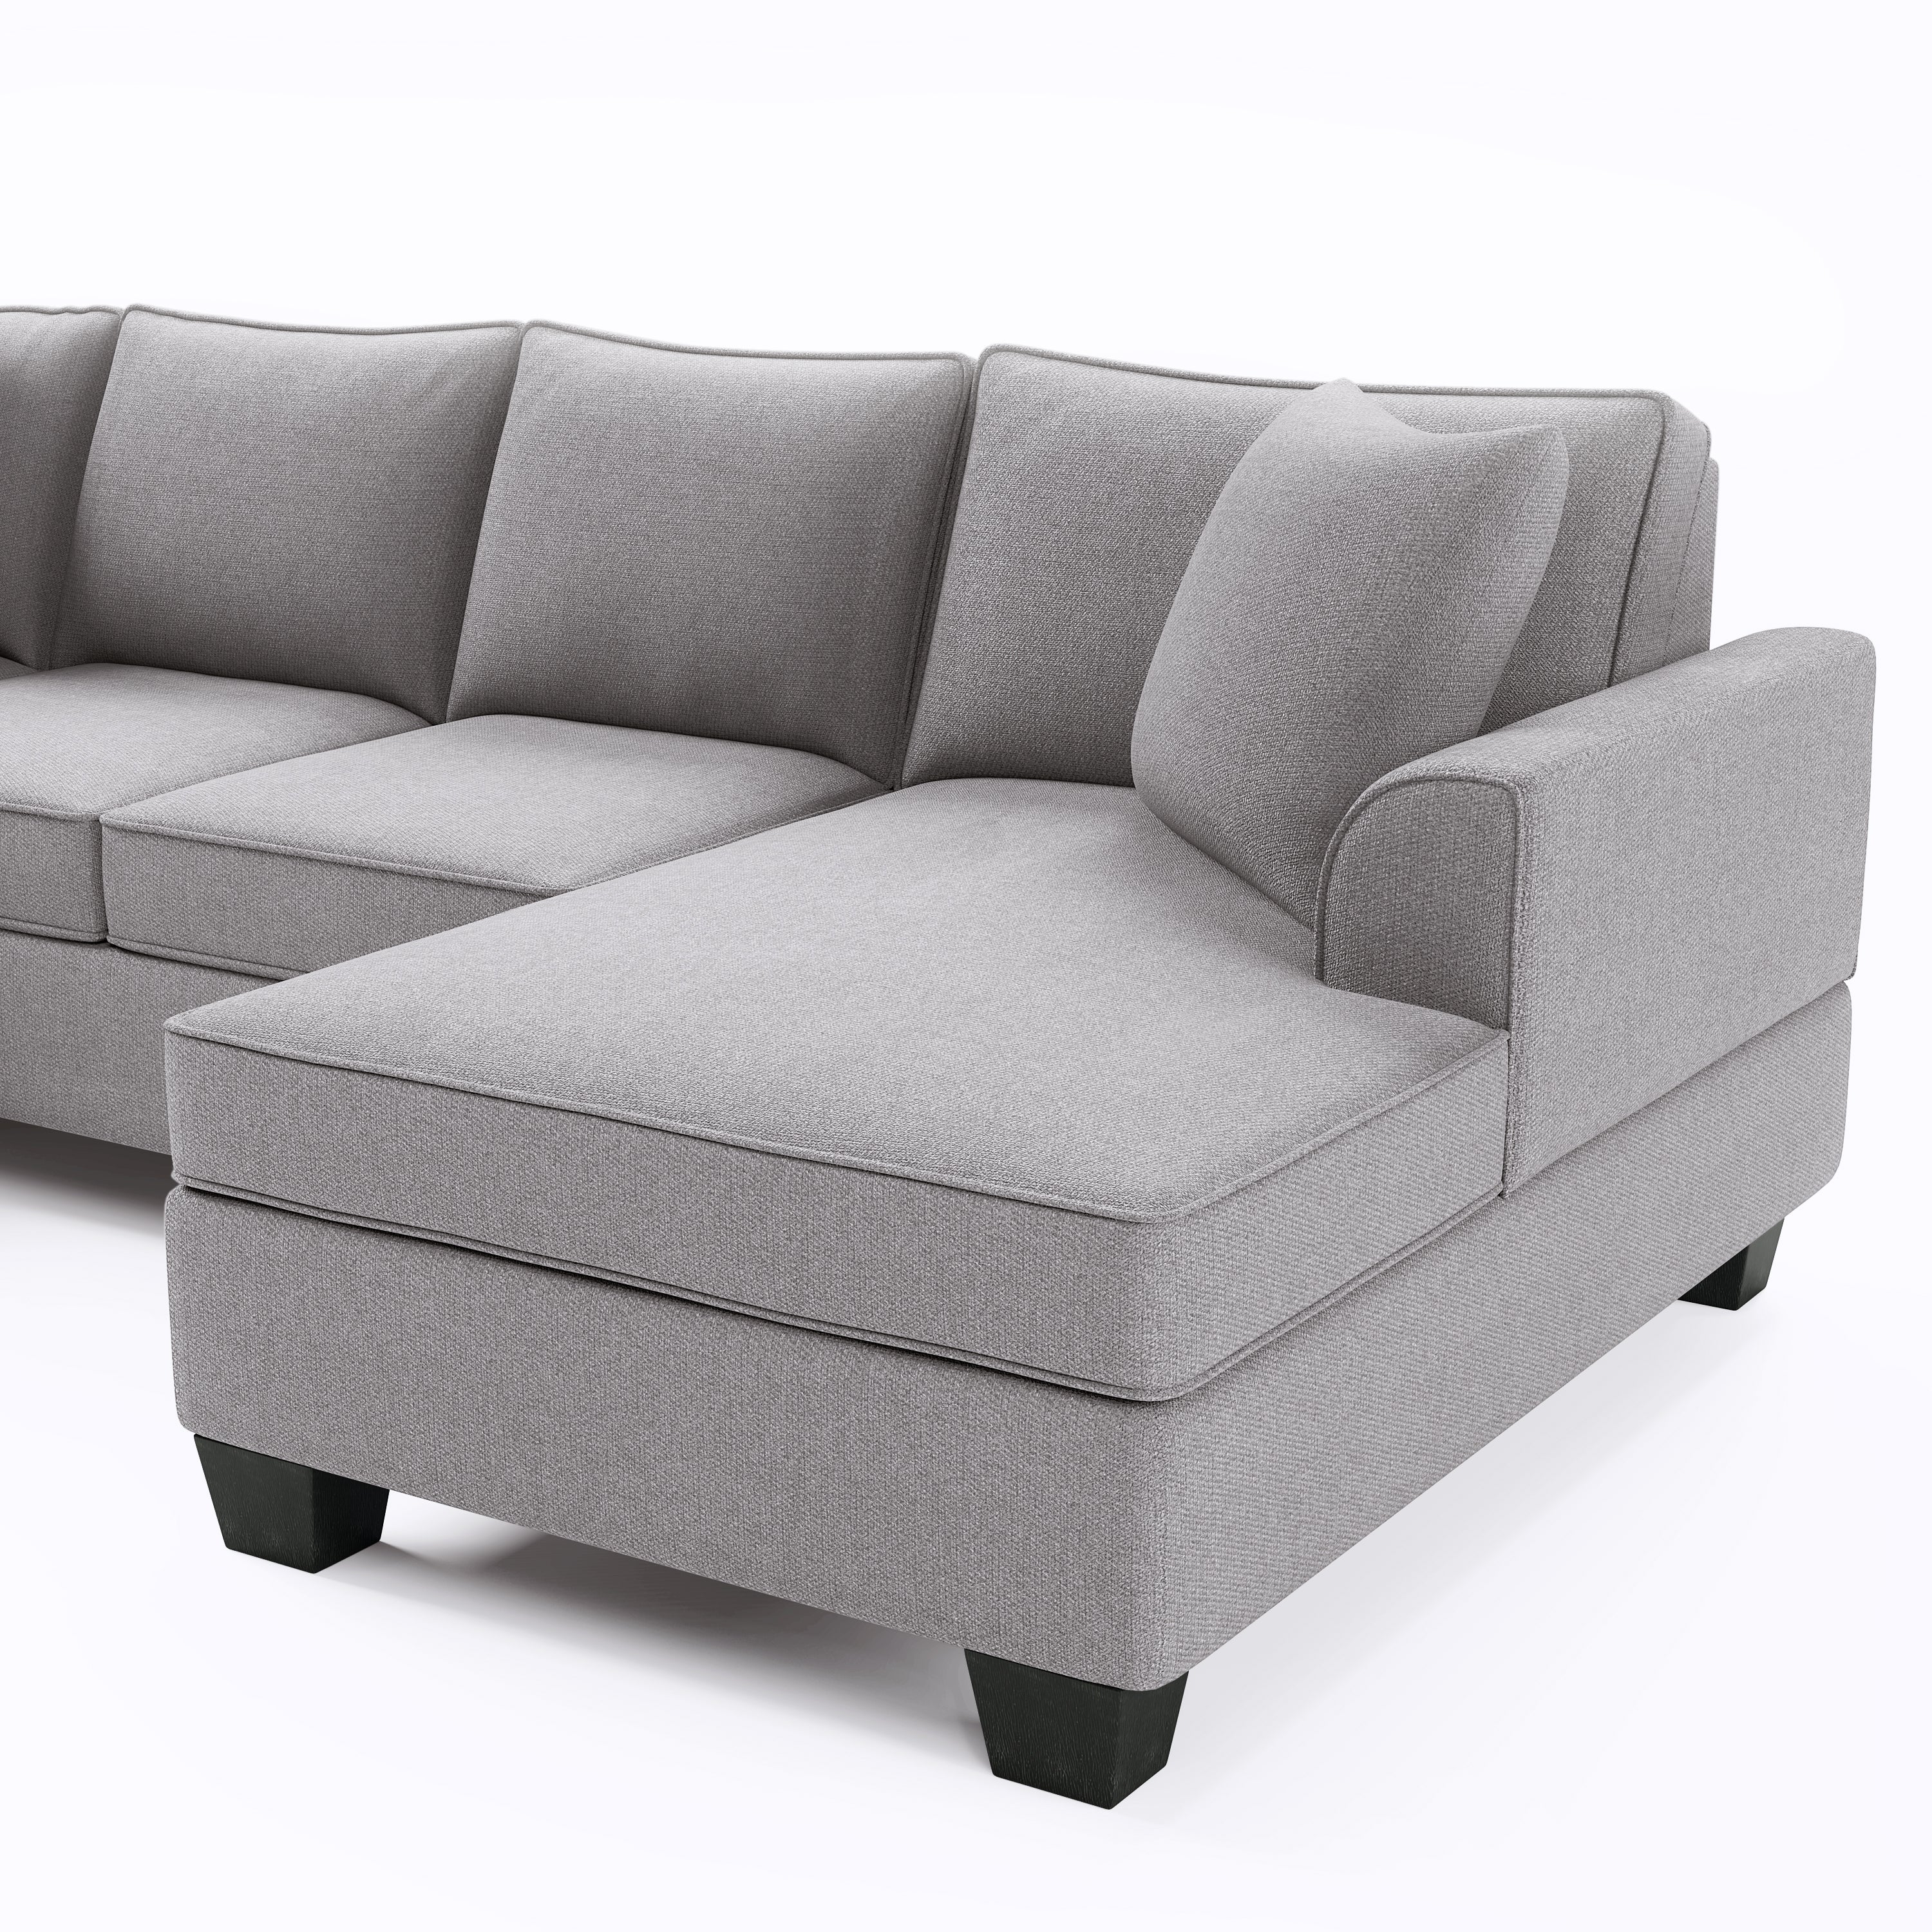 110*86 Inch Modular Sofa Upholstered Classic U Shape Sofa Include 3 Pillows